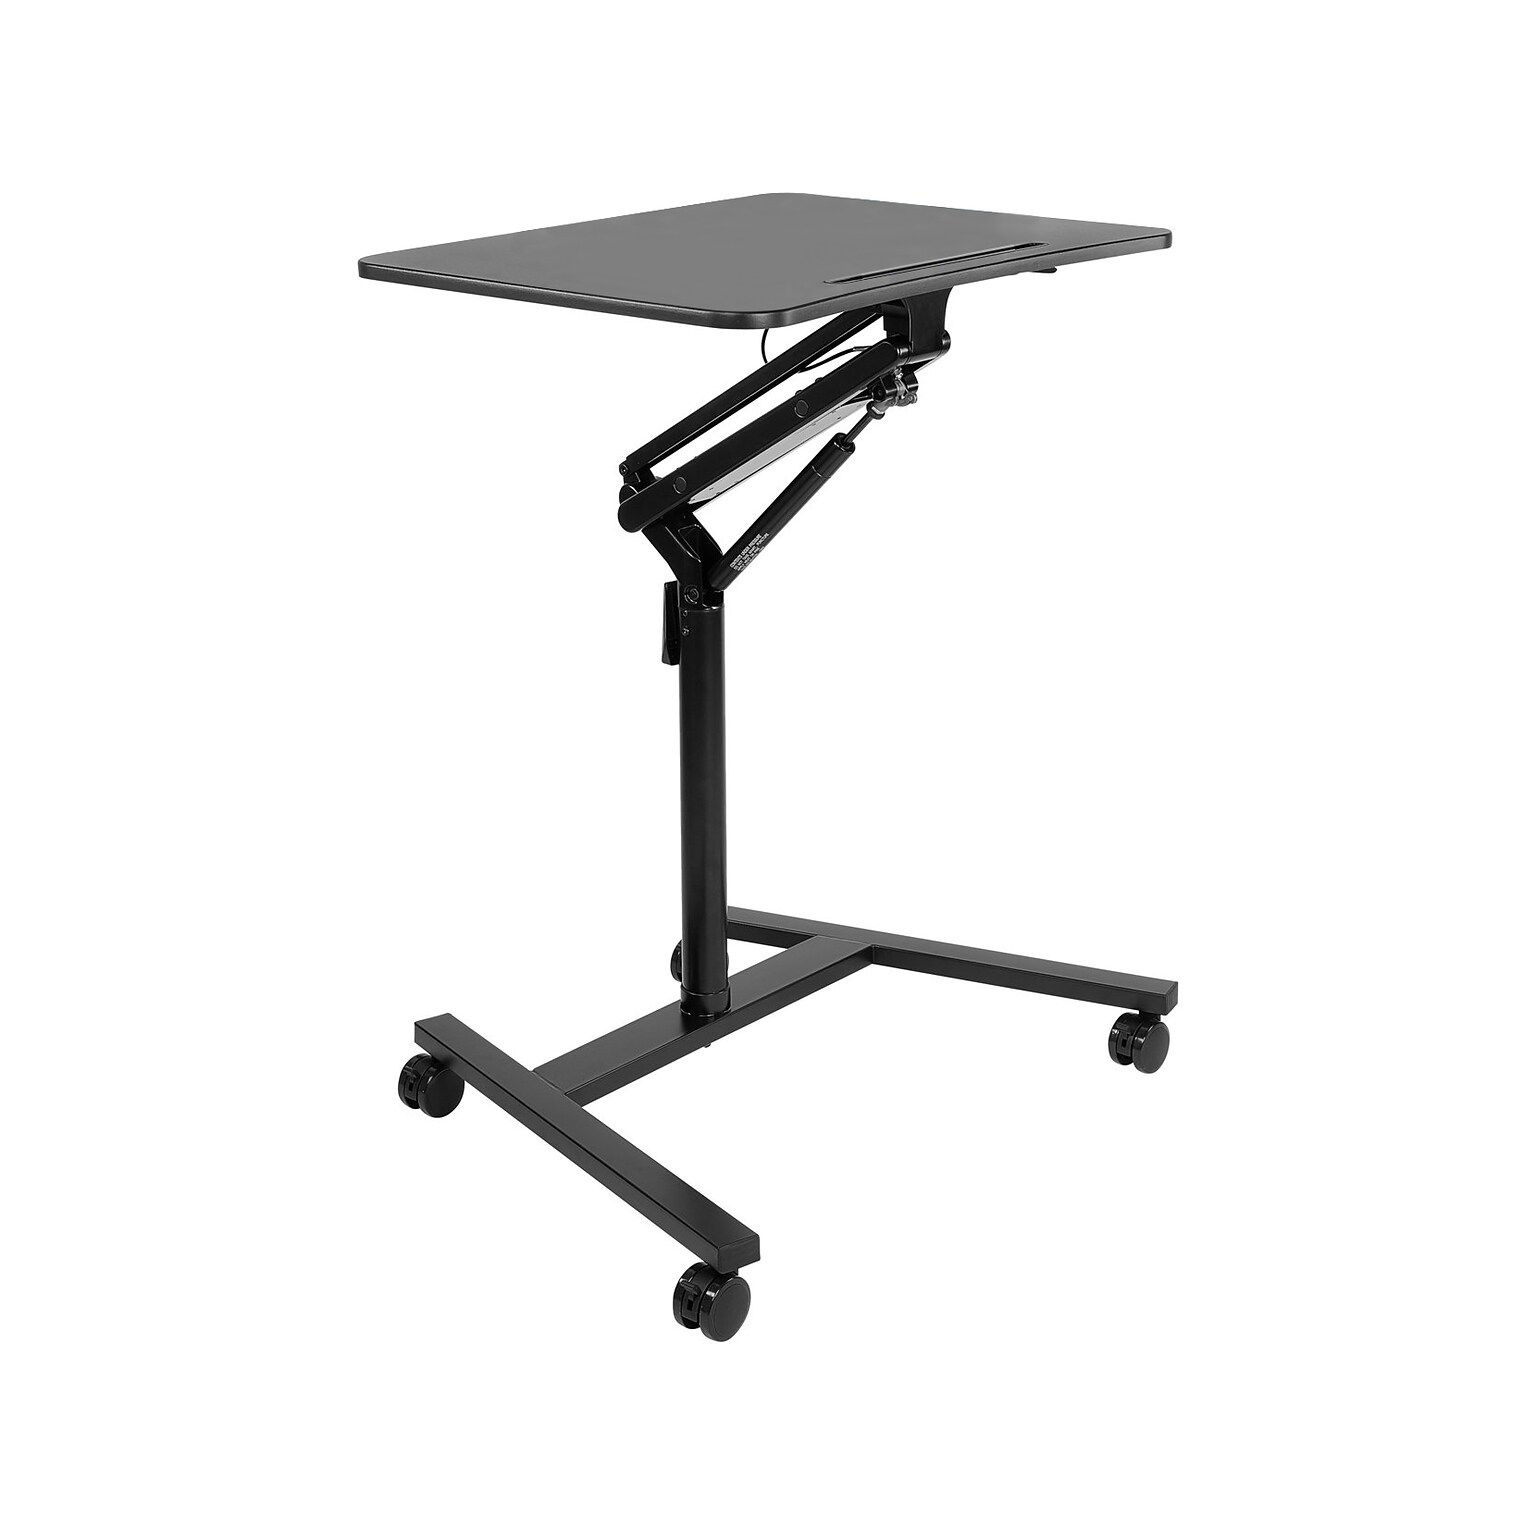 Mount-It! 28W Manual Adjustable Standing Desk, Black (MI-7969)